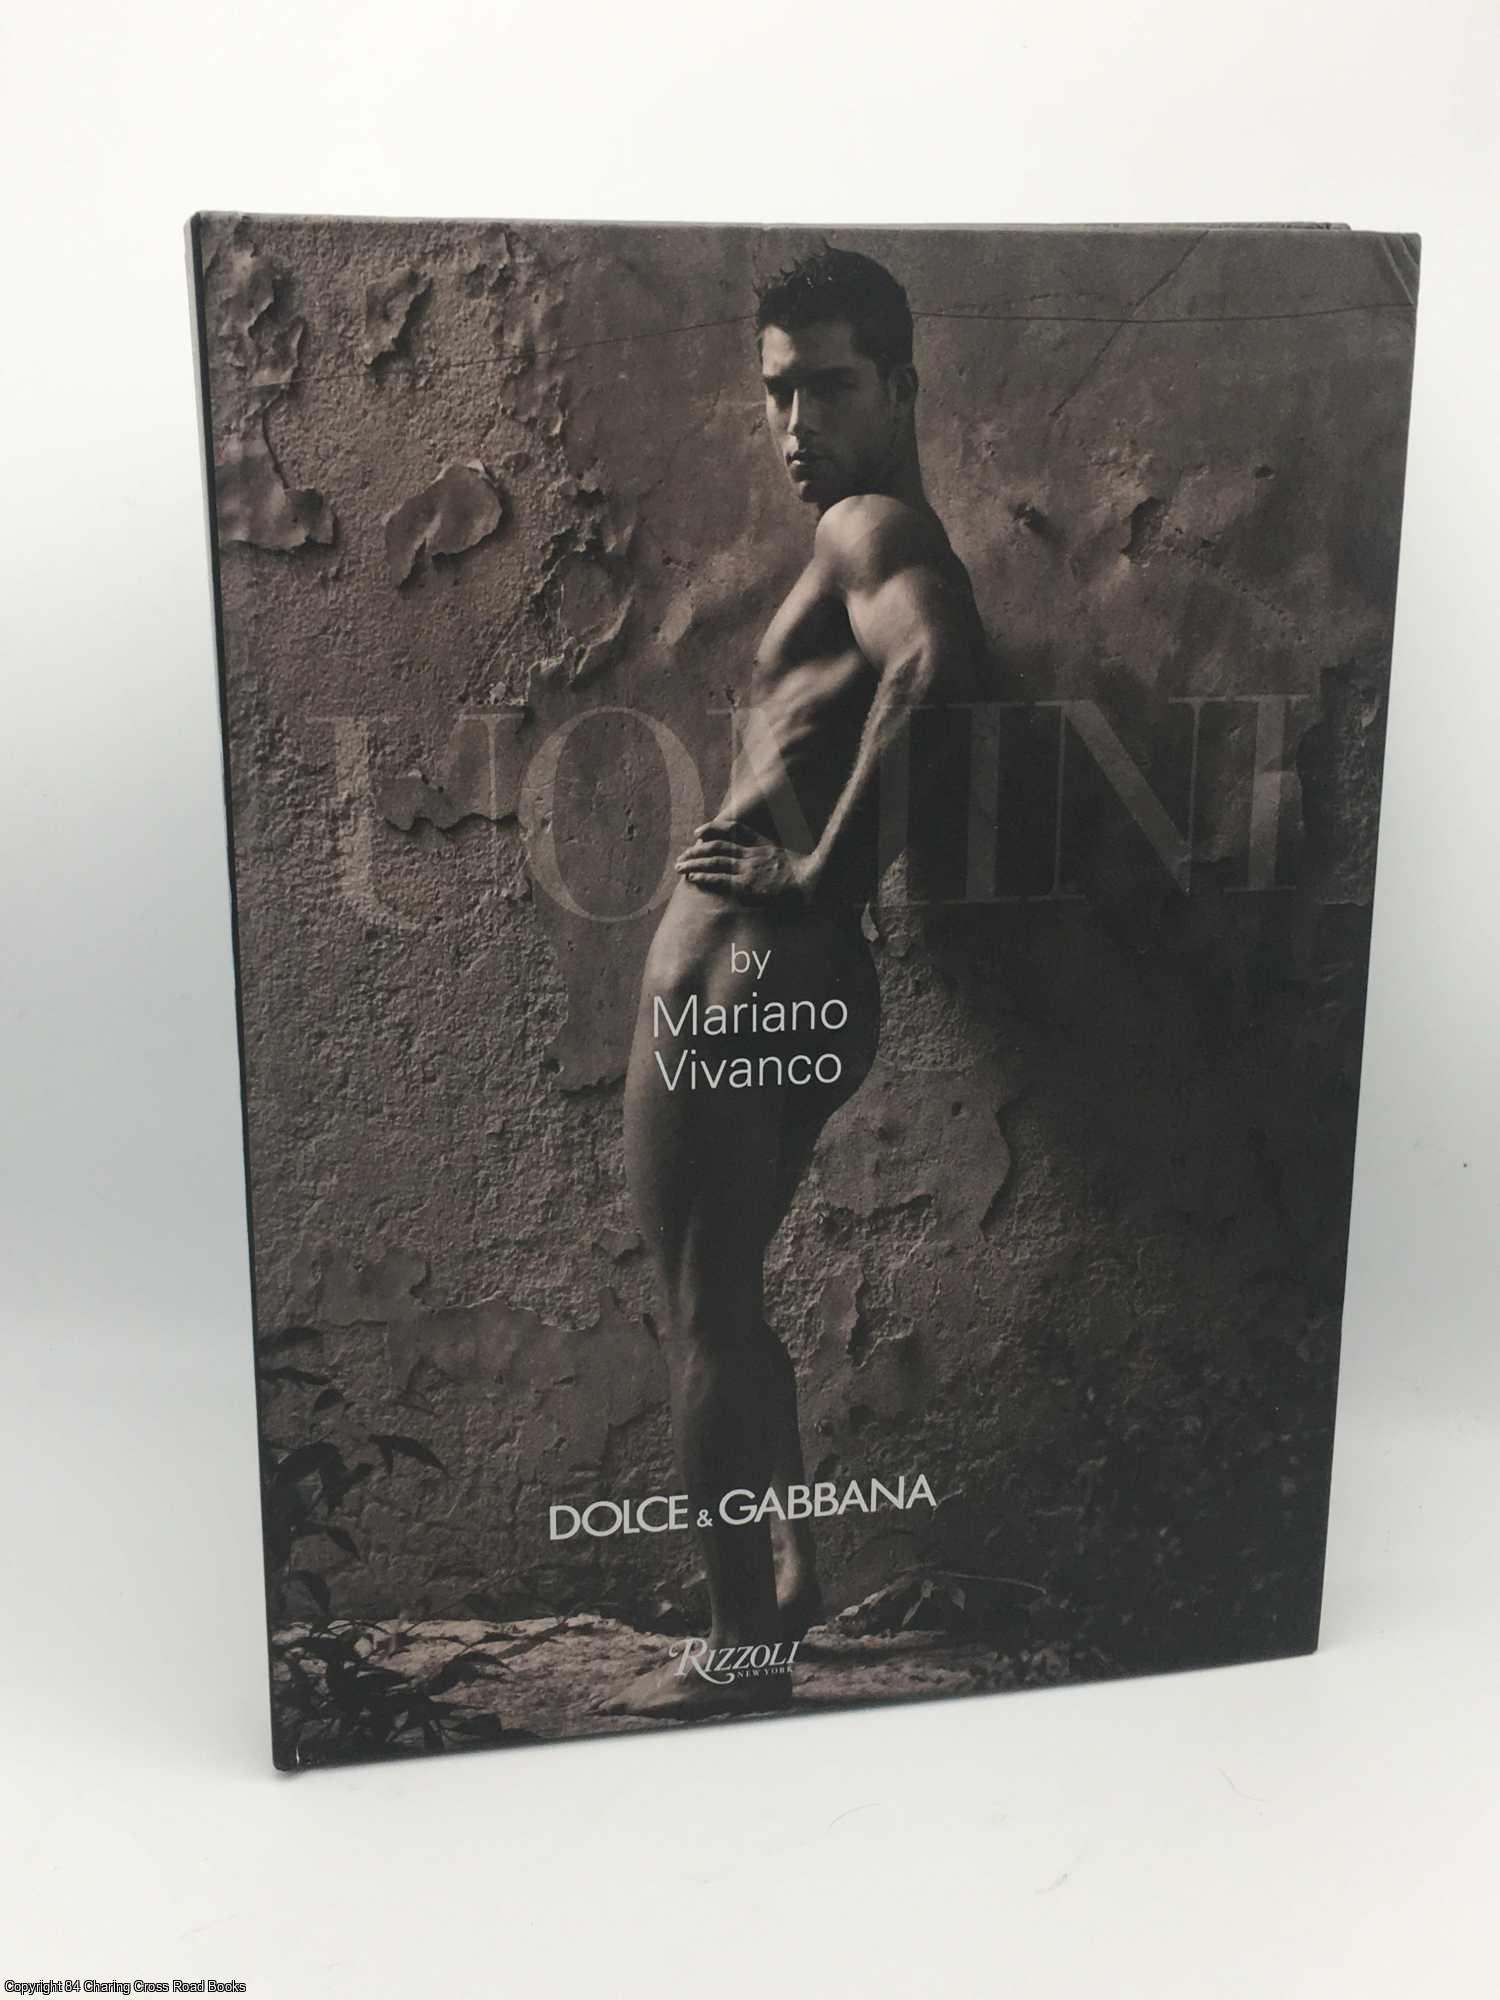 Vivanco, Mariano - Dolce & Gabbana Uomini: Masculinity and Sensuality